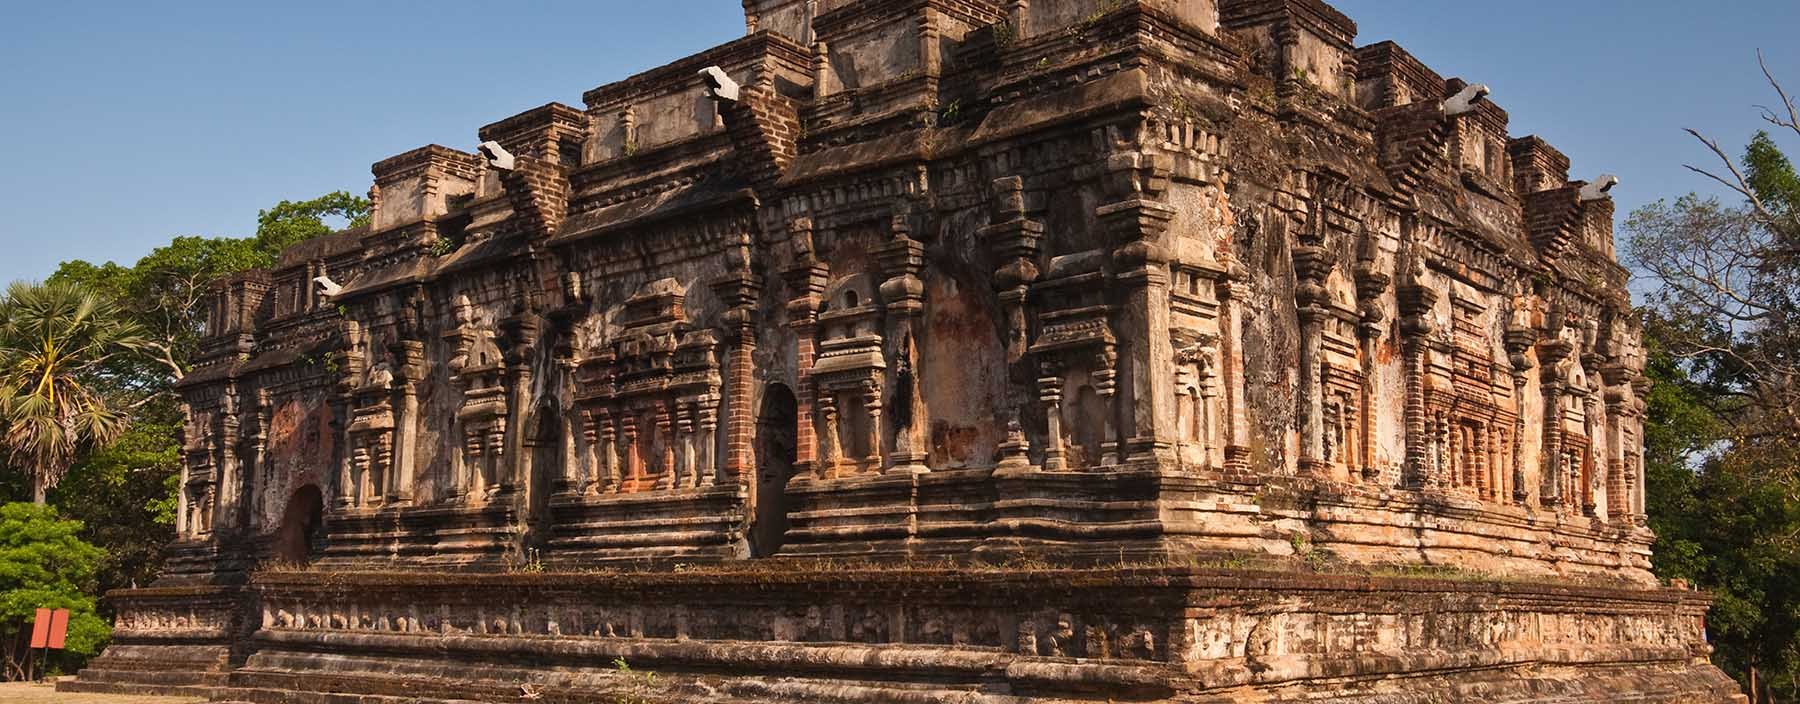 sri lanka, polonnaruwa, ancient building.jpg